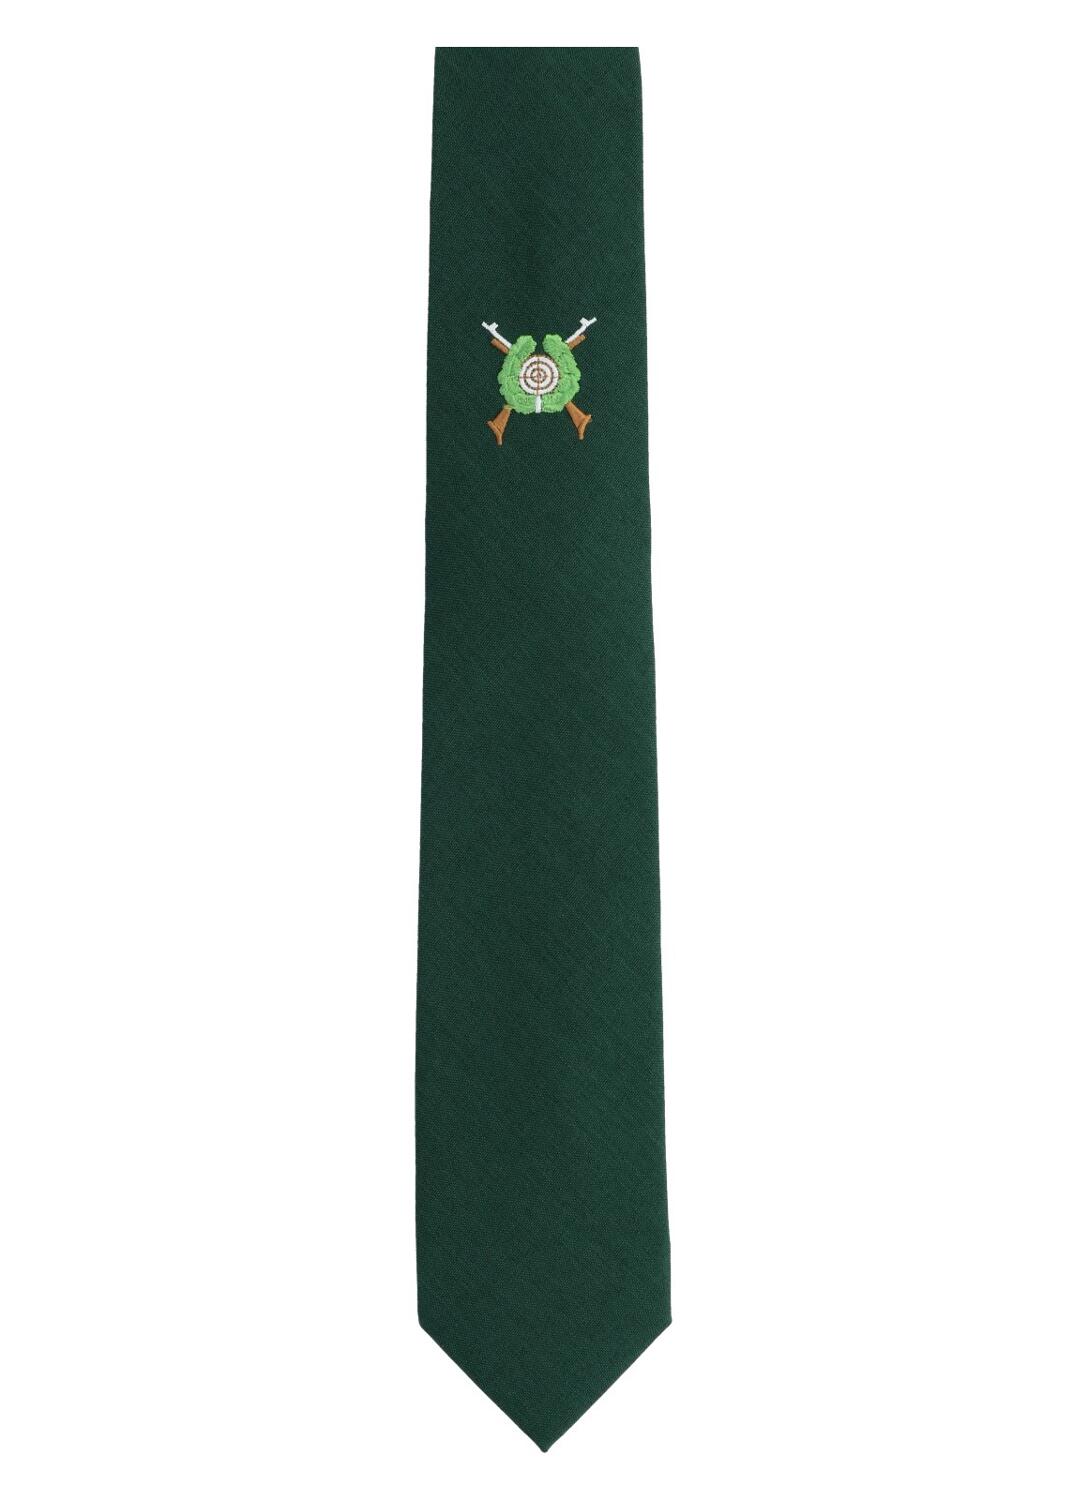 | Schützenkrawatte,Krawatte,Krawatte Deutschland grün,Krawatte Anzug Hemd,Krawatte Willen